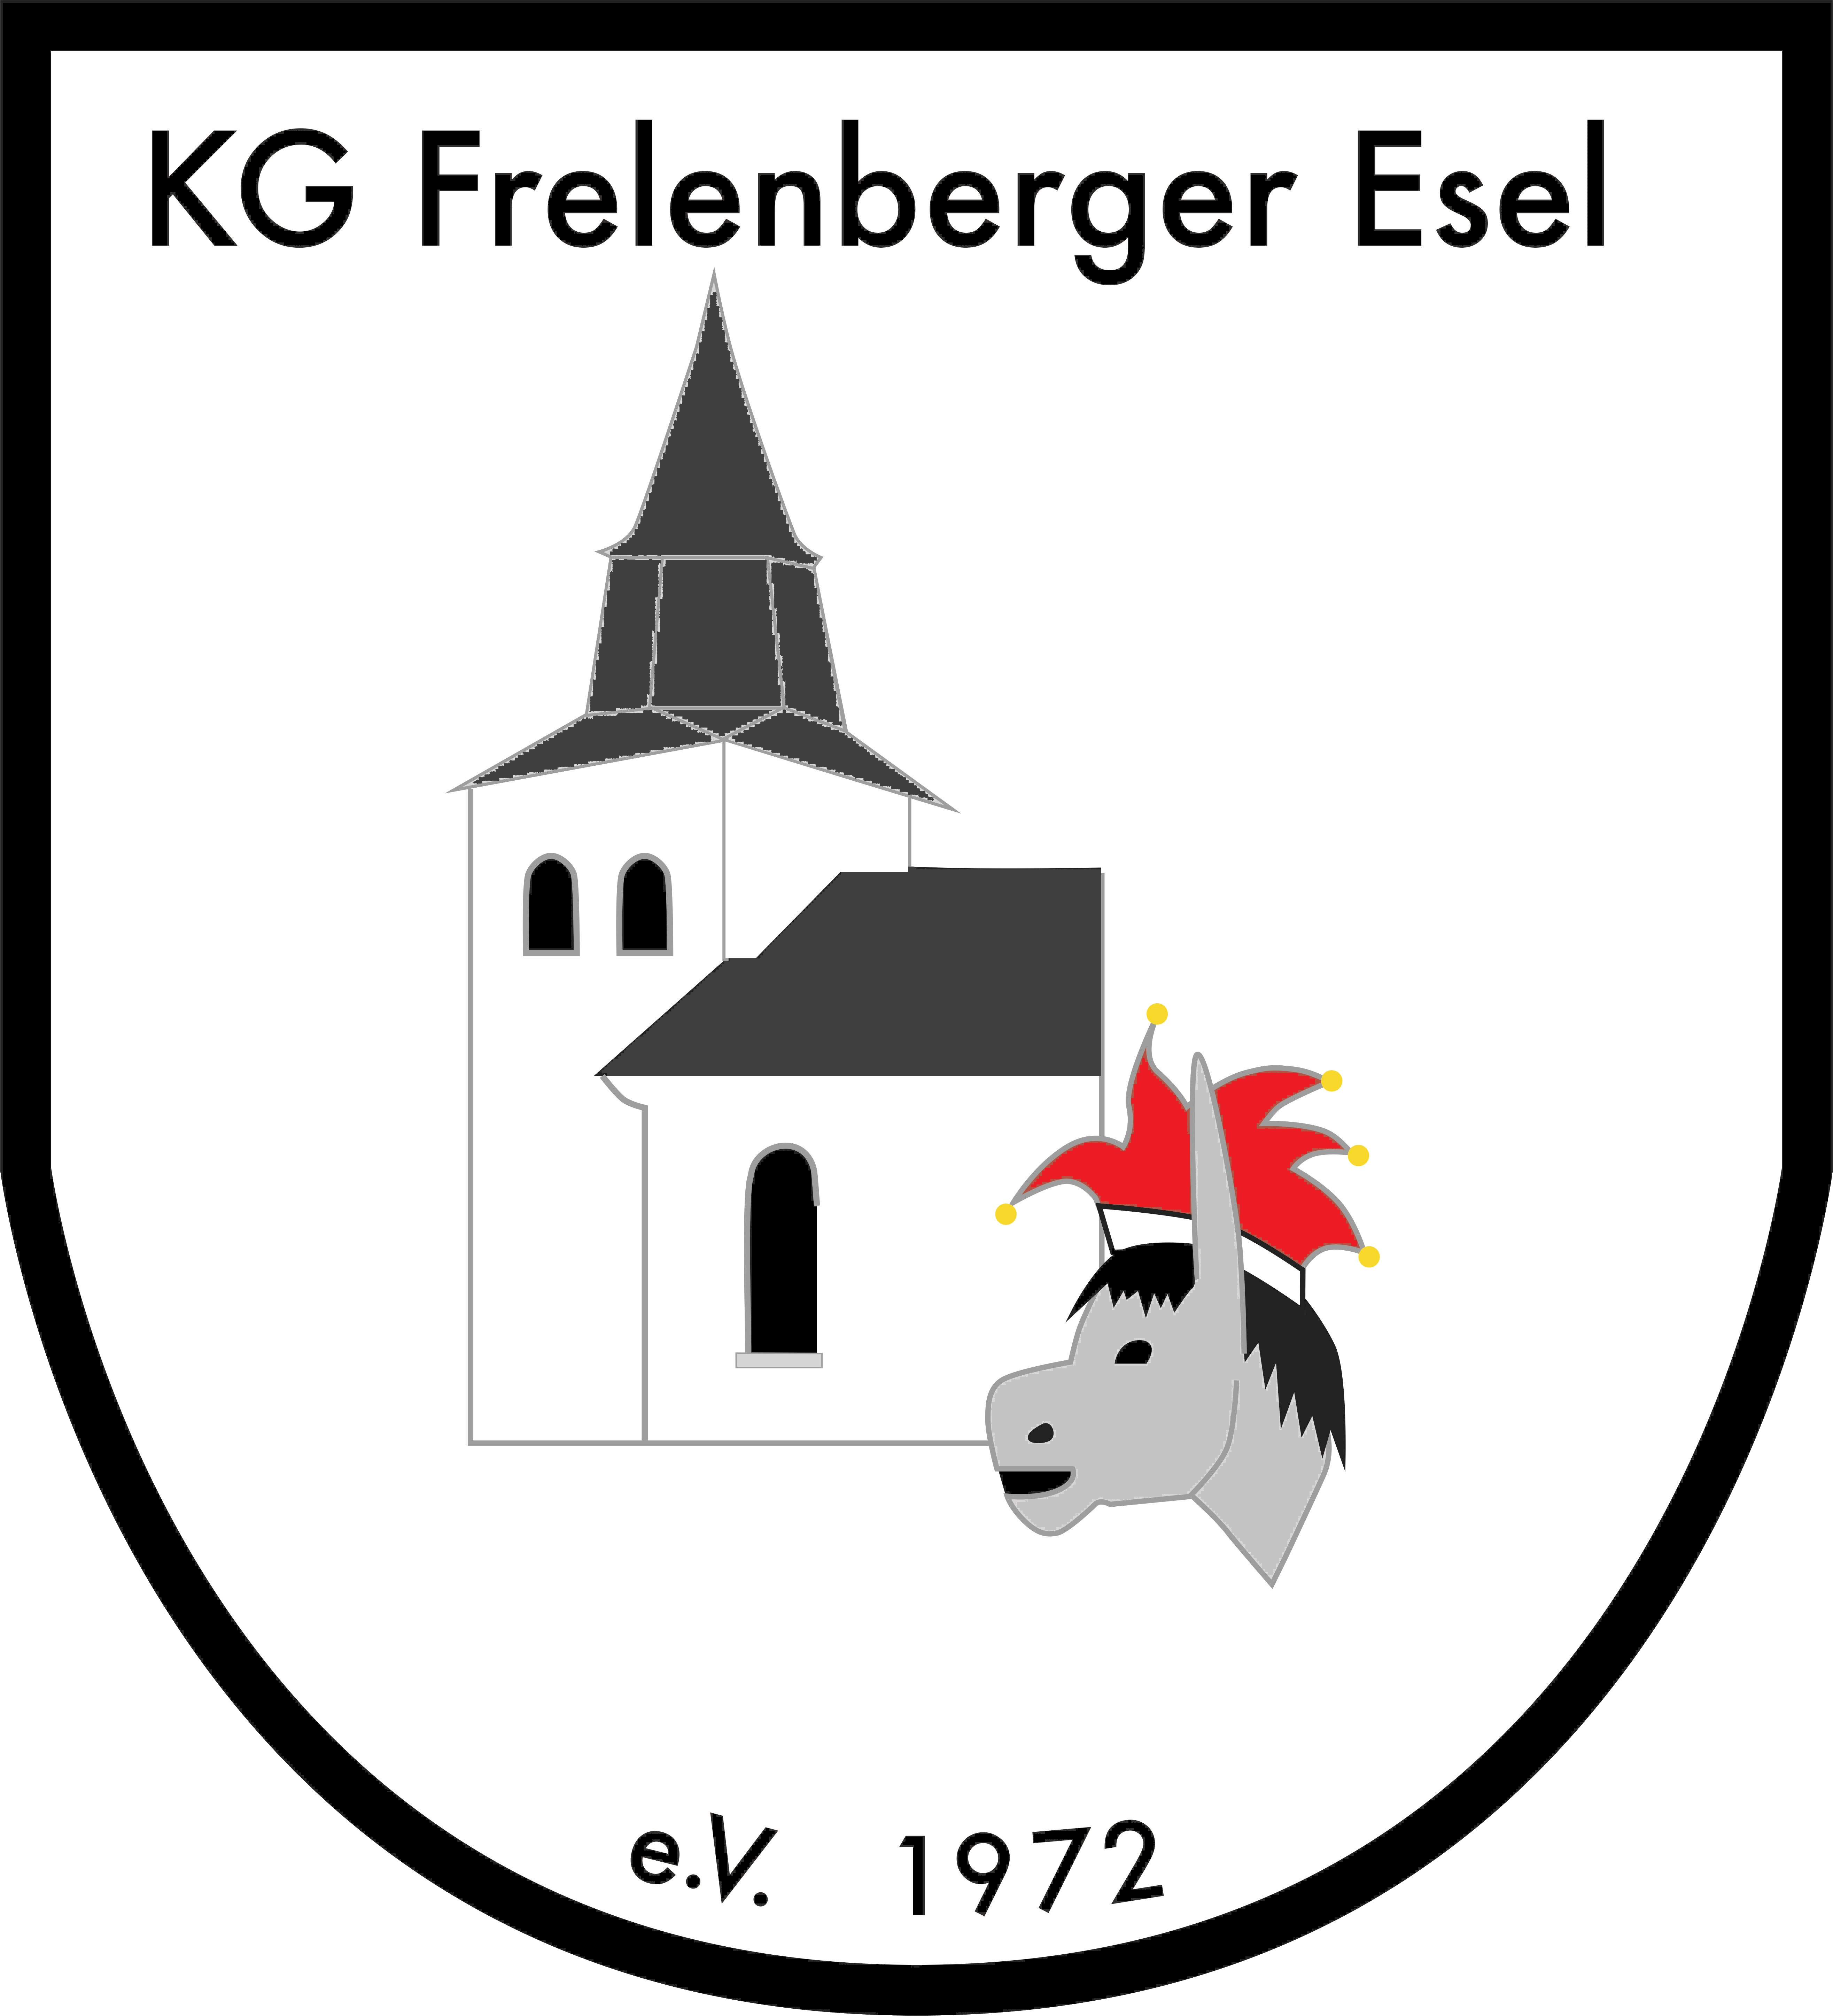 (c) Frelenberger-esel.com